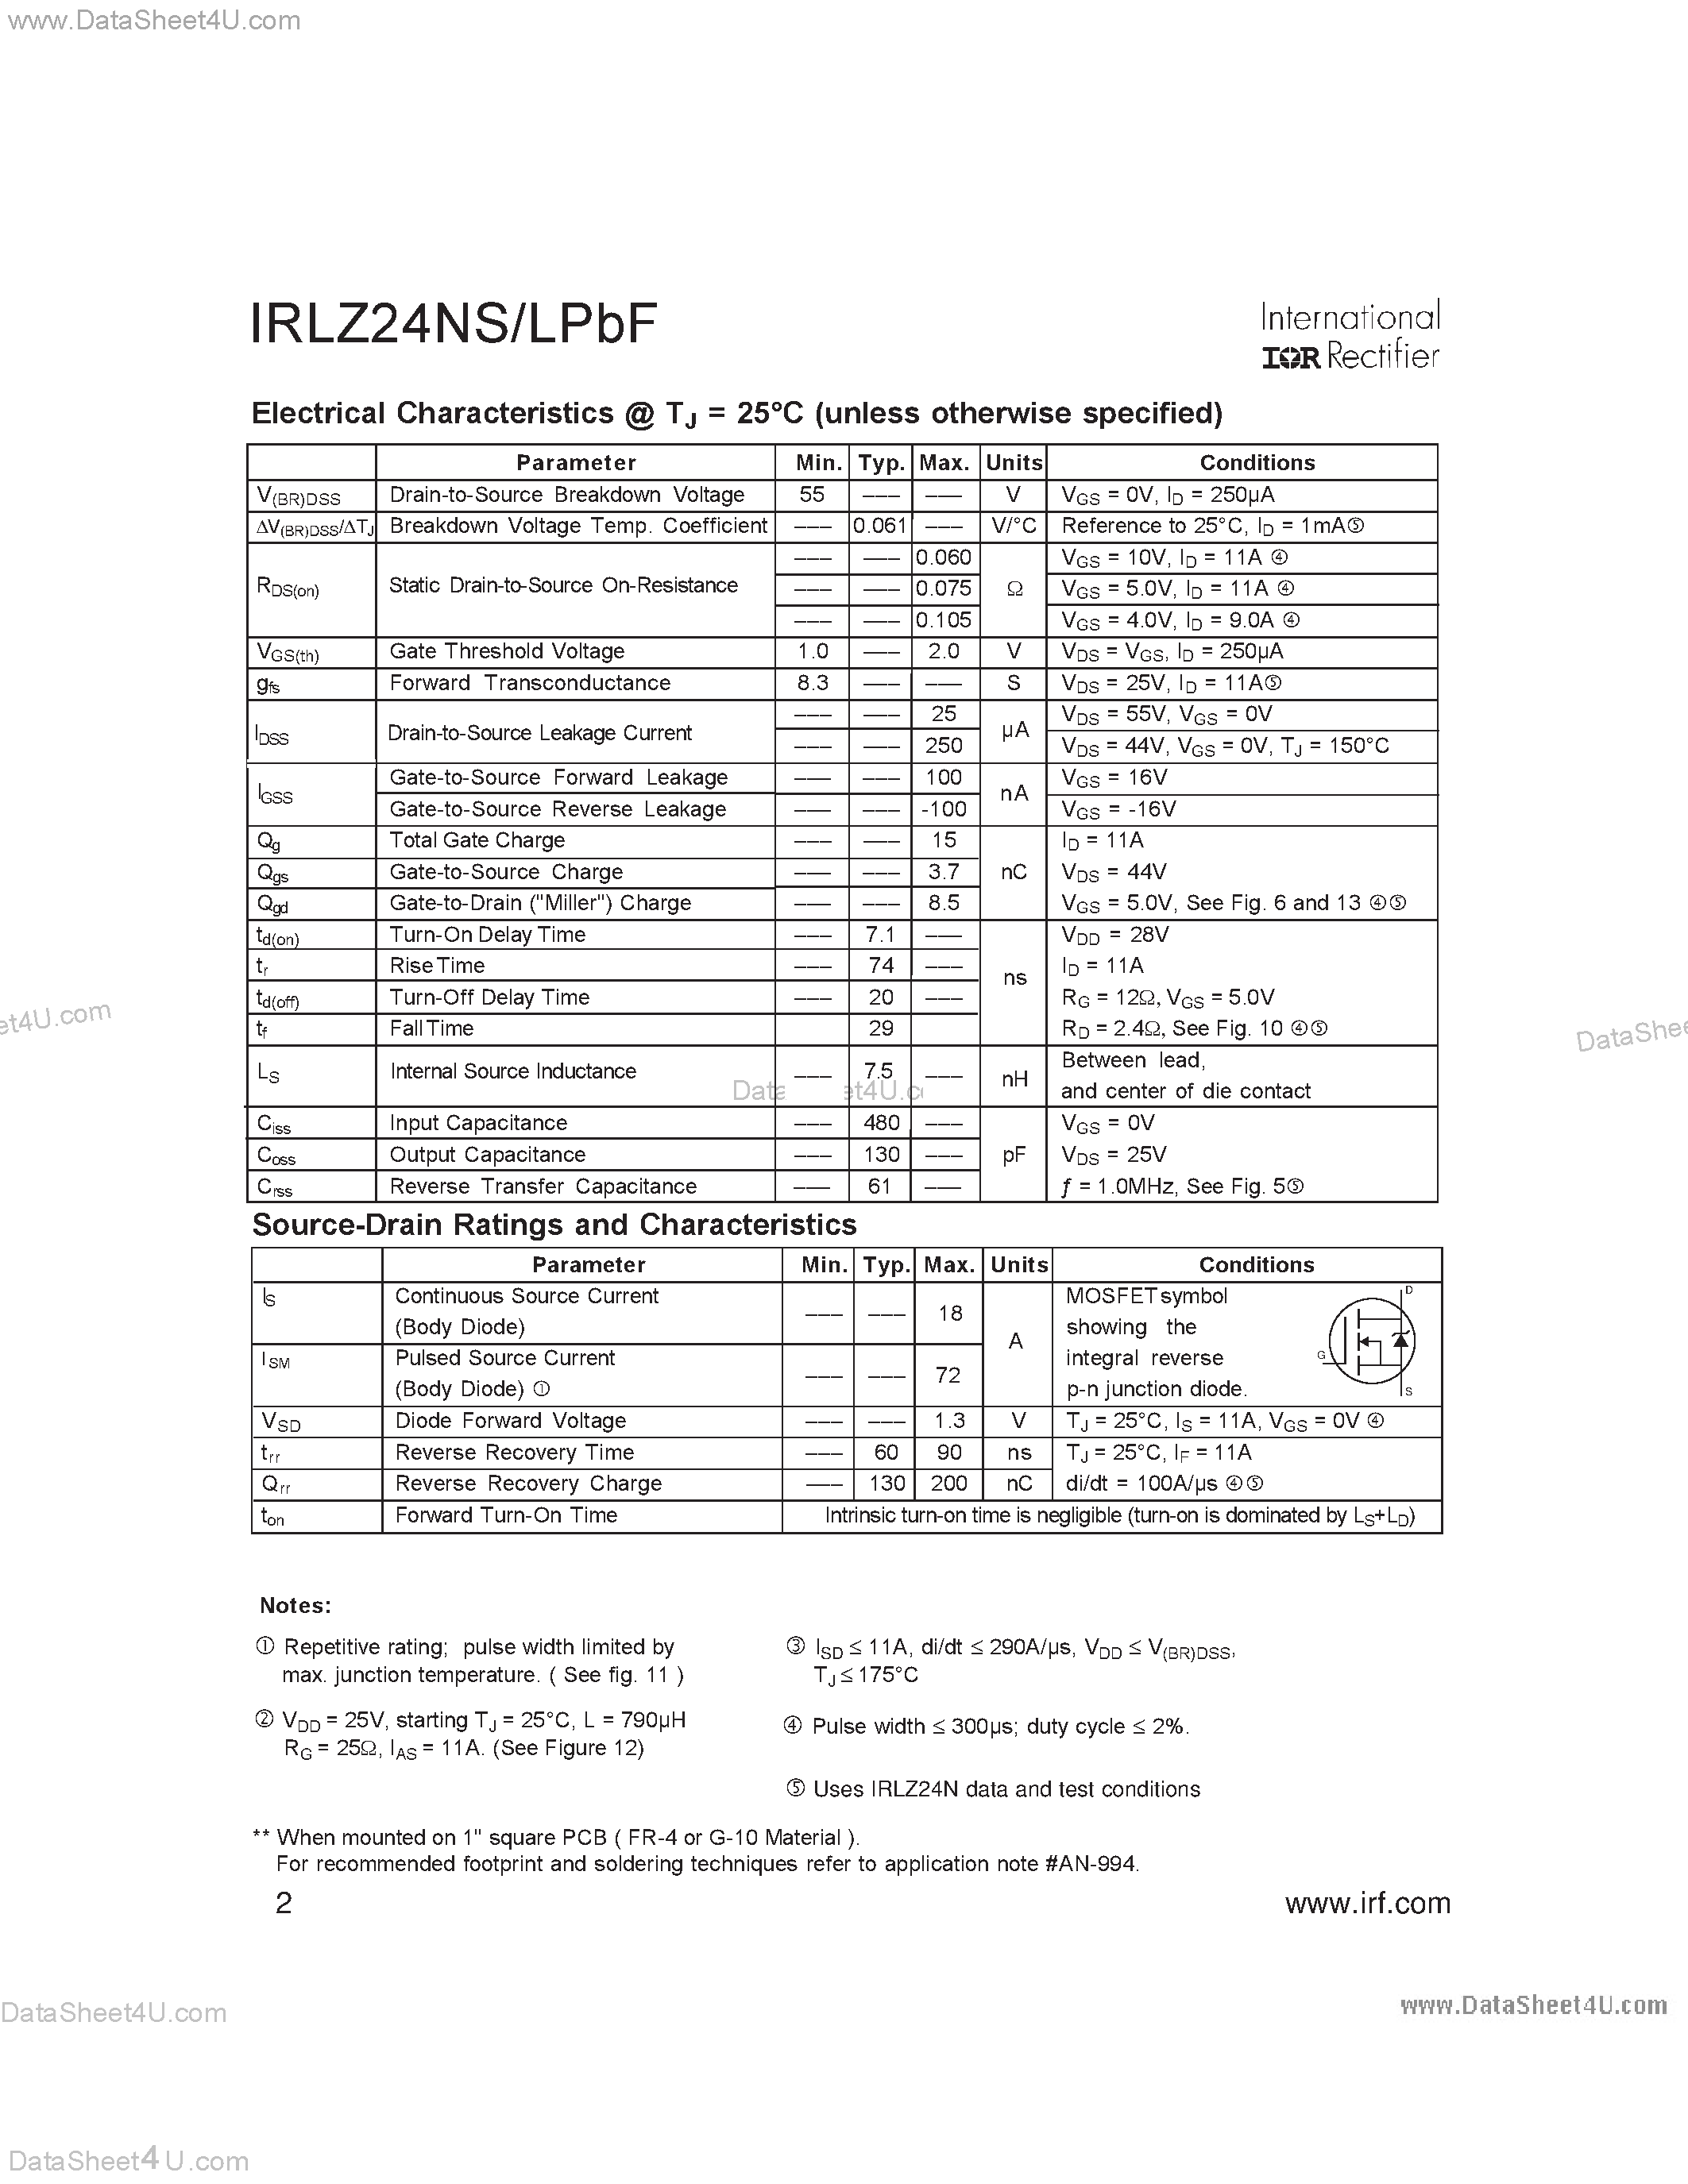 Даташит IRLZ24NLPBF - (IRLZ24NSPBF / IRLZ24NLPBF) Power MOSFET страница 2